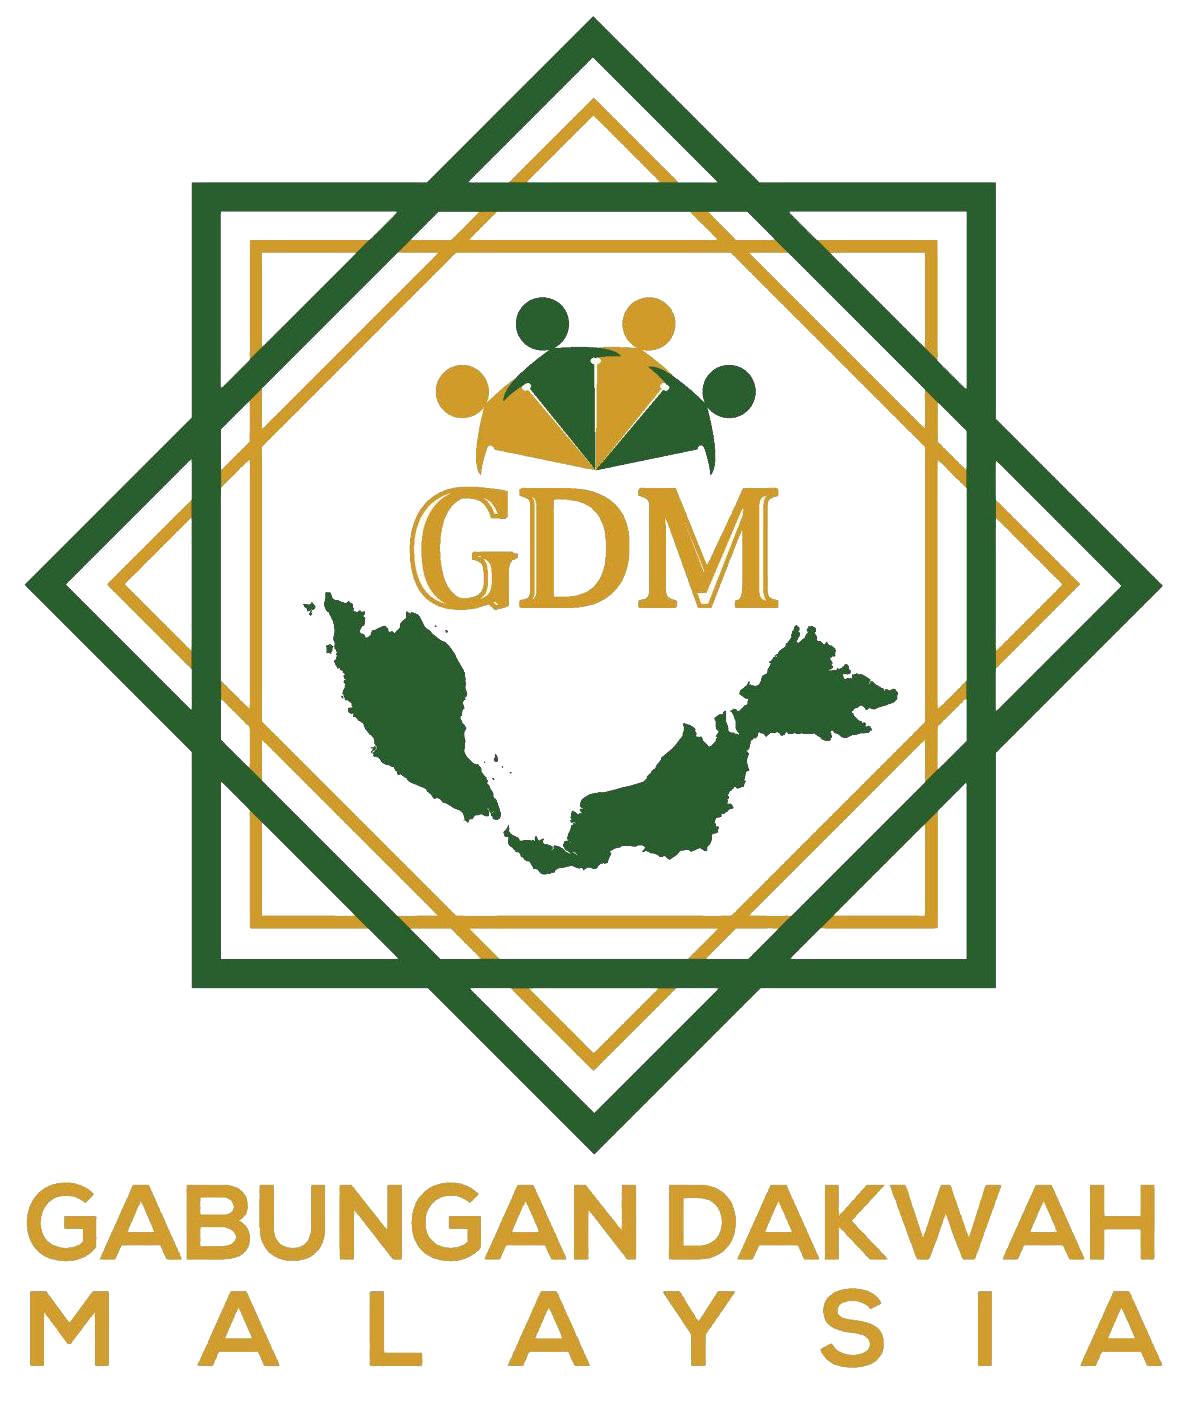 GABUNGAN DAKWAH MALAYSIA